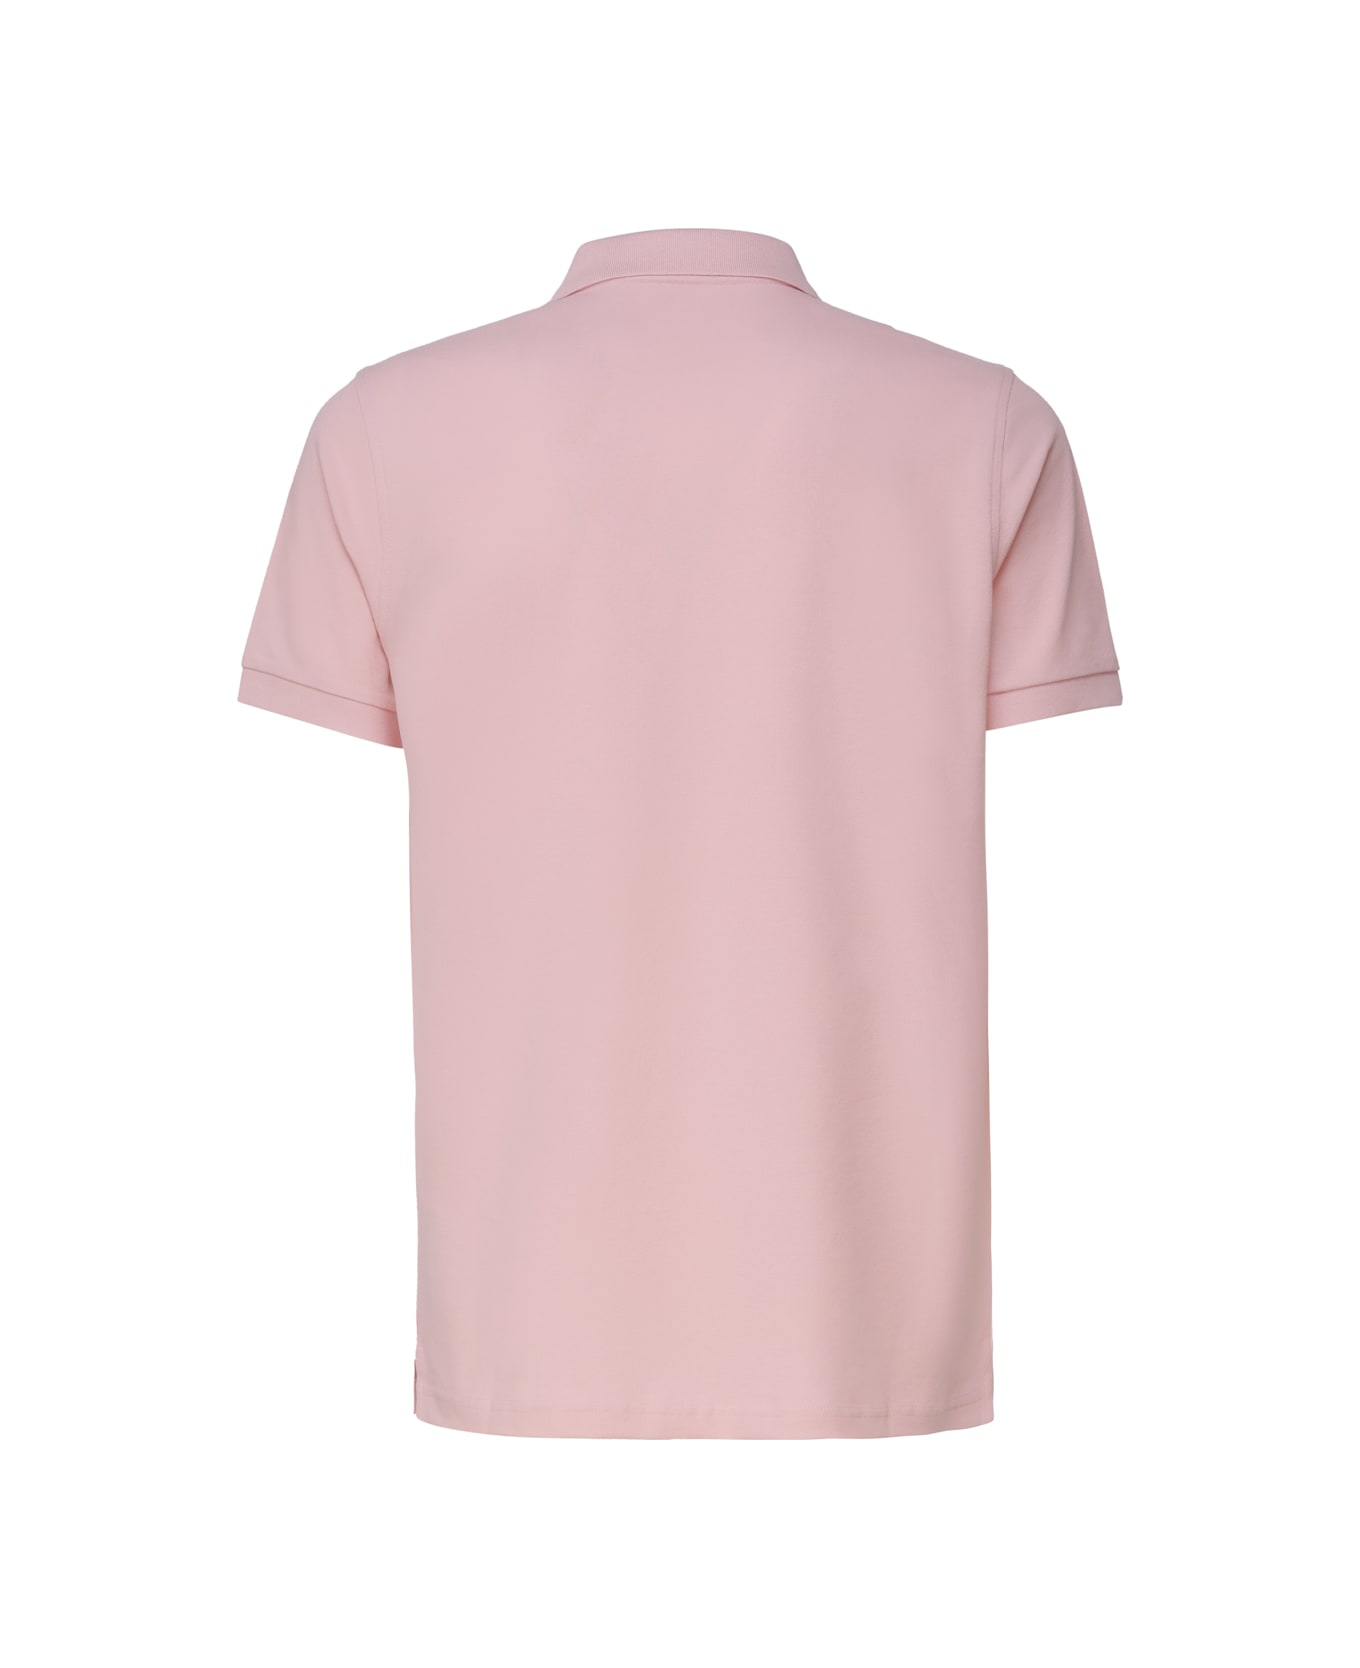 Fay Stretch Polo Shirt - Rosa ポロシャツ